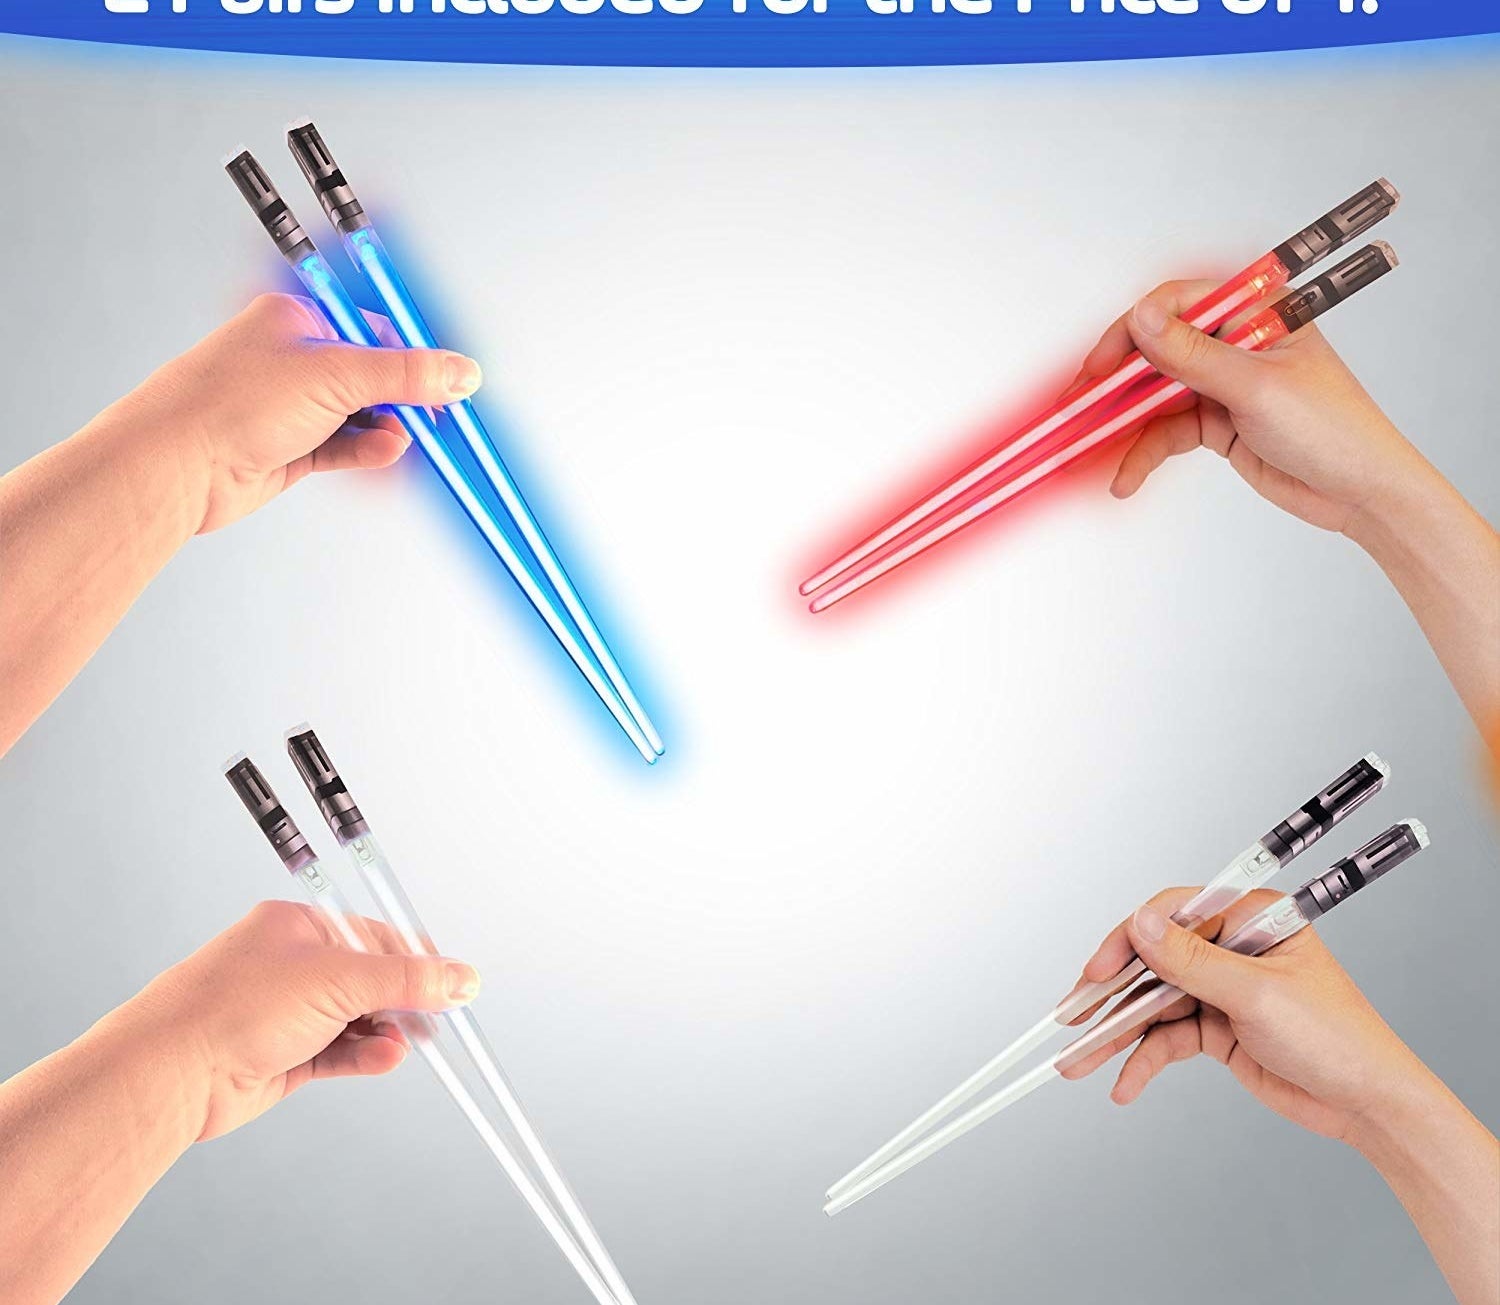 models holding chops sticks that look like lightsabers